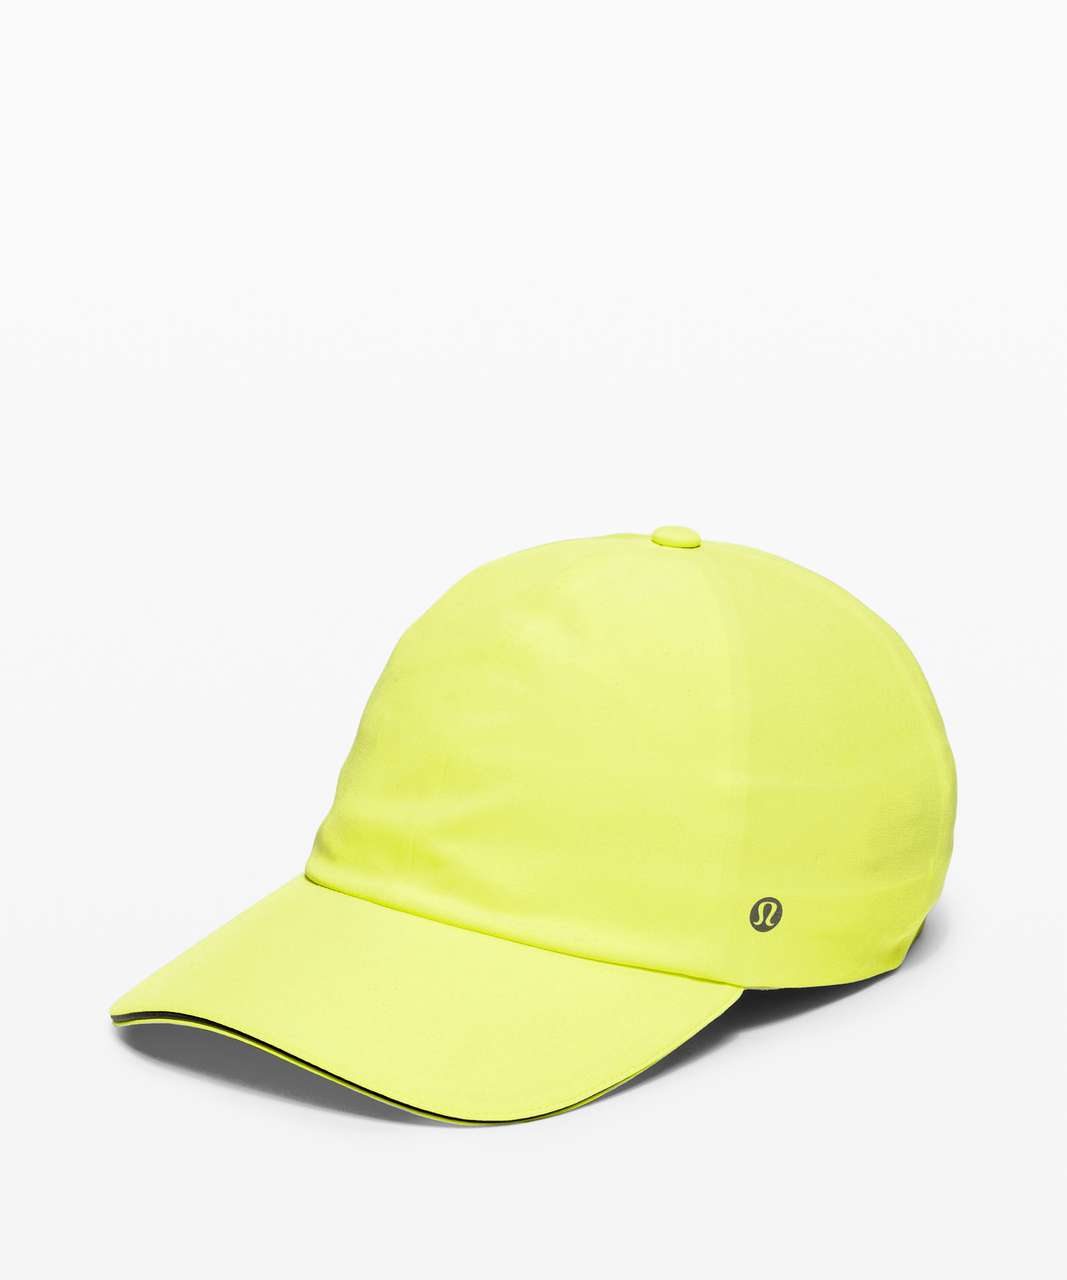 Lululemon Fast and Free Womens Run Hat - Highlight Yellow